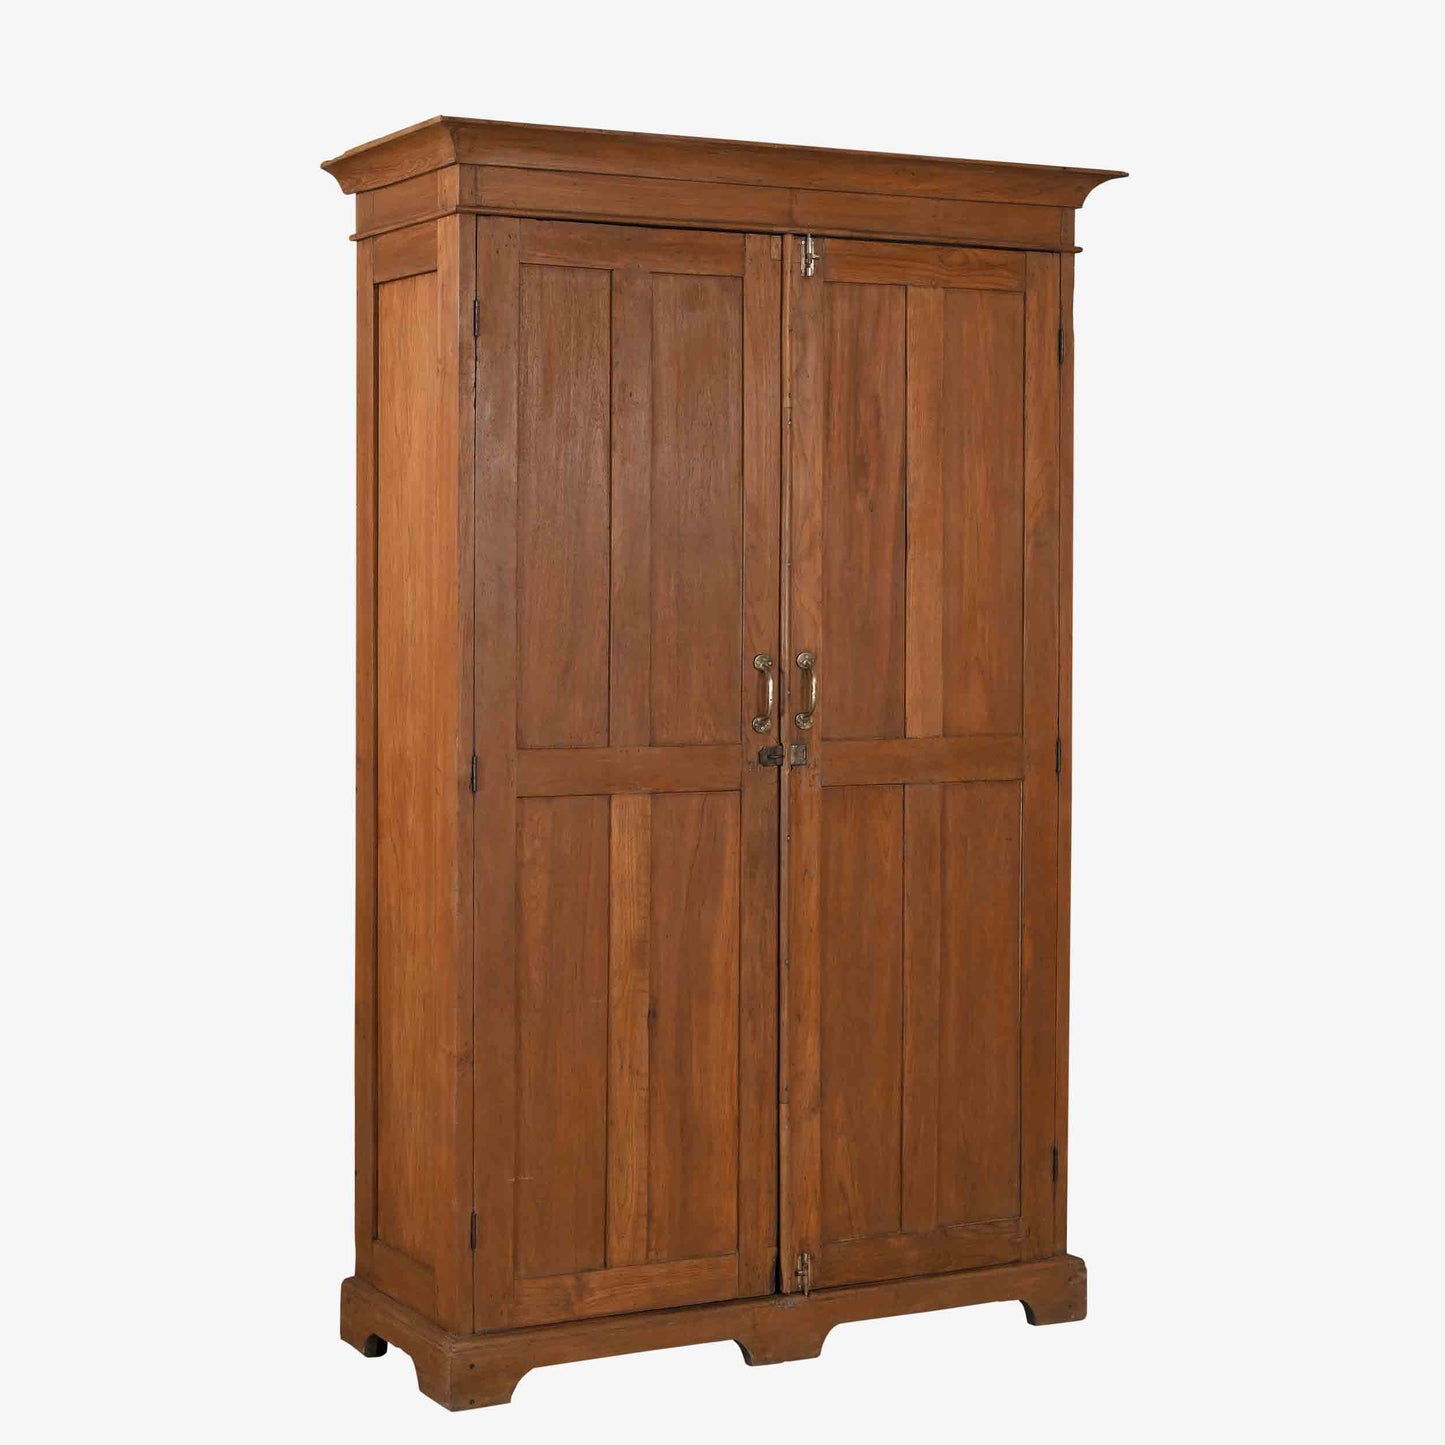 The Fallon Antique Cupboard Dresser